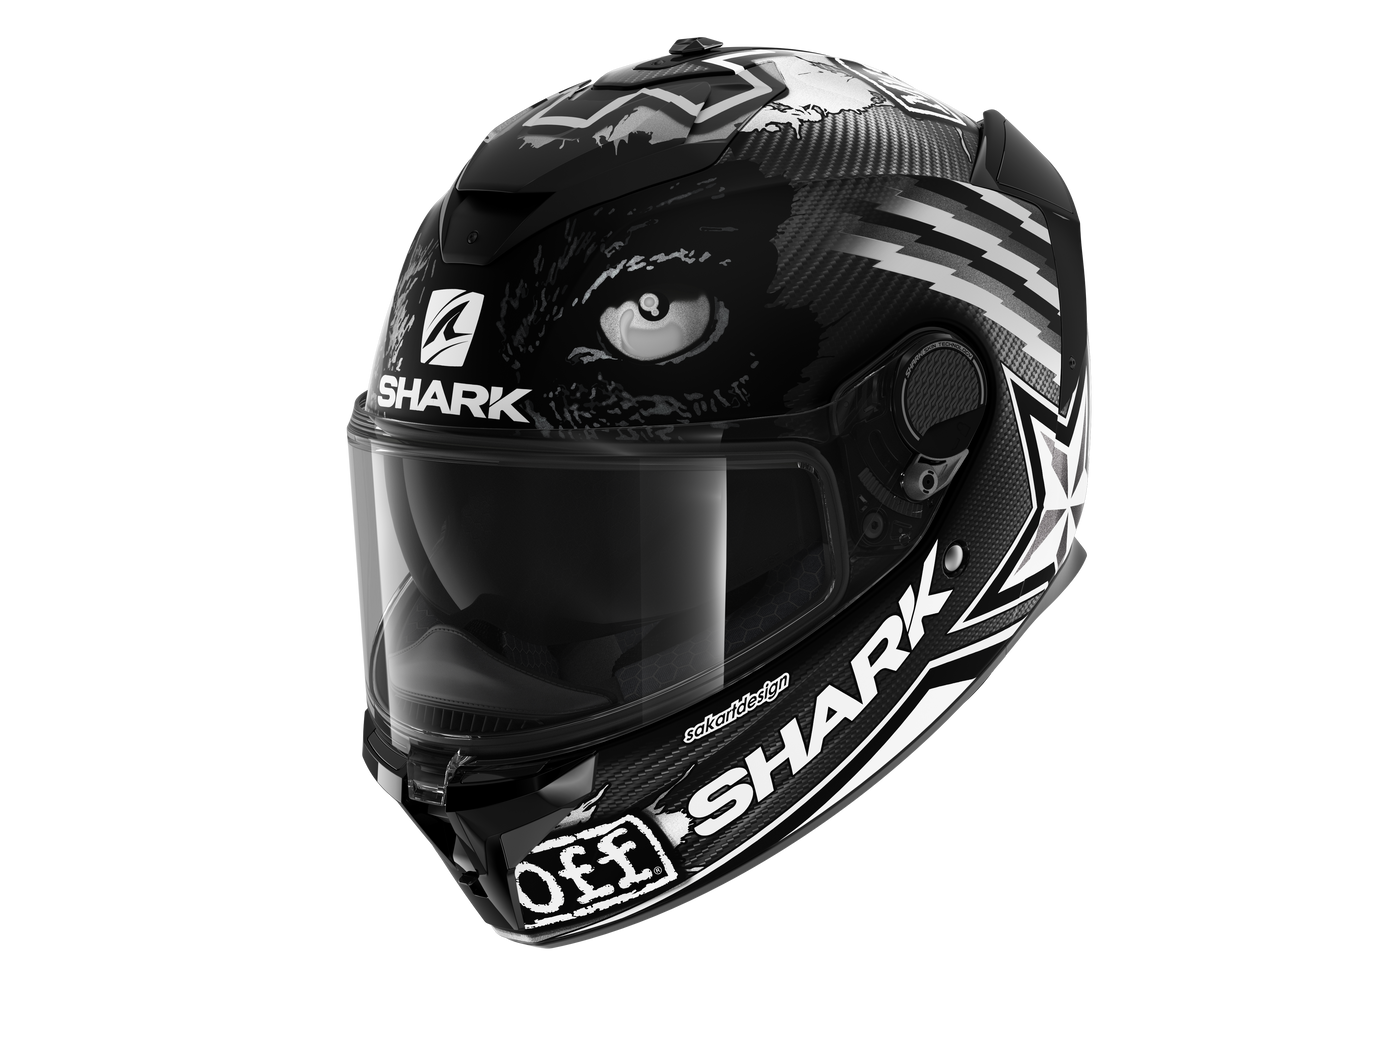 Shark Spartan GT Carbon Redding Matt Carbon White Anthracite Helmet (DWA) Limited Edition